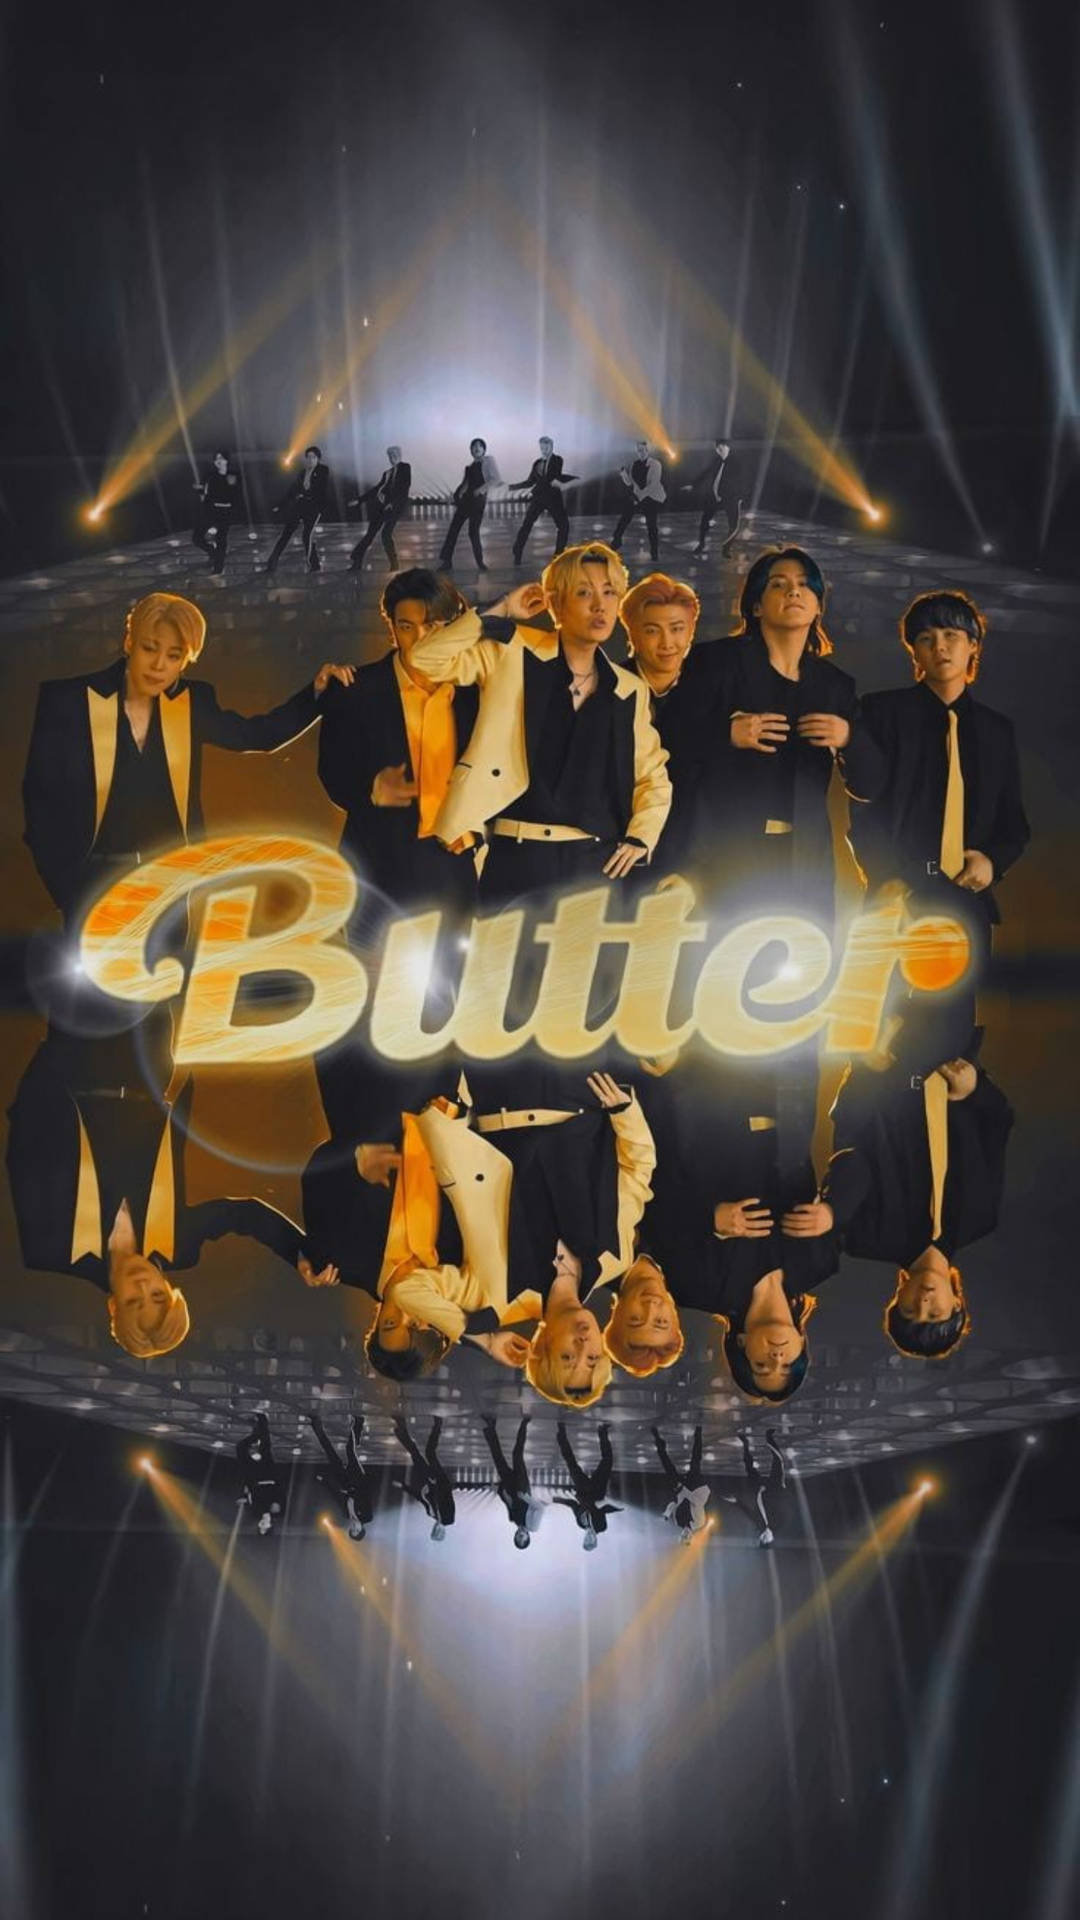 Btsbutter Mv Fan Edit - Bts Butter Musikvideo Fan Edit Wallpaper